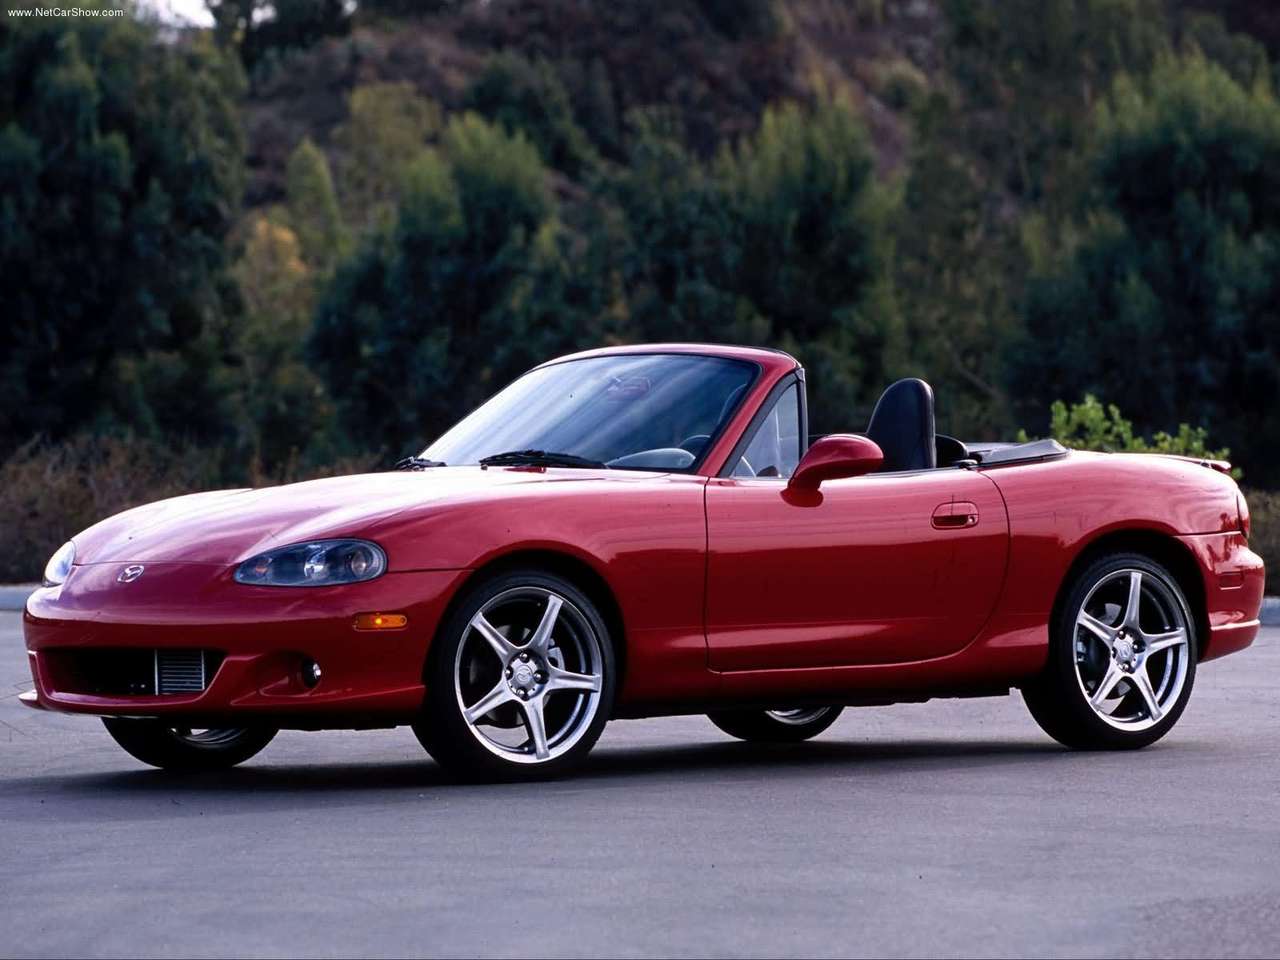 Mazda - Populaire francais d'automobiles: 2004 Mazda MazdaSpeed MX5